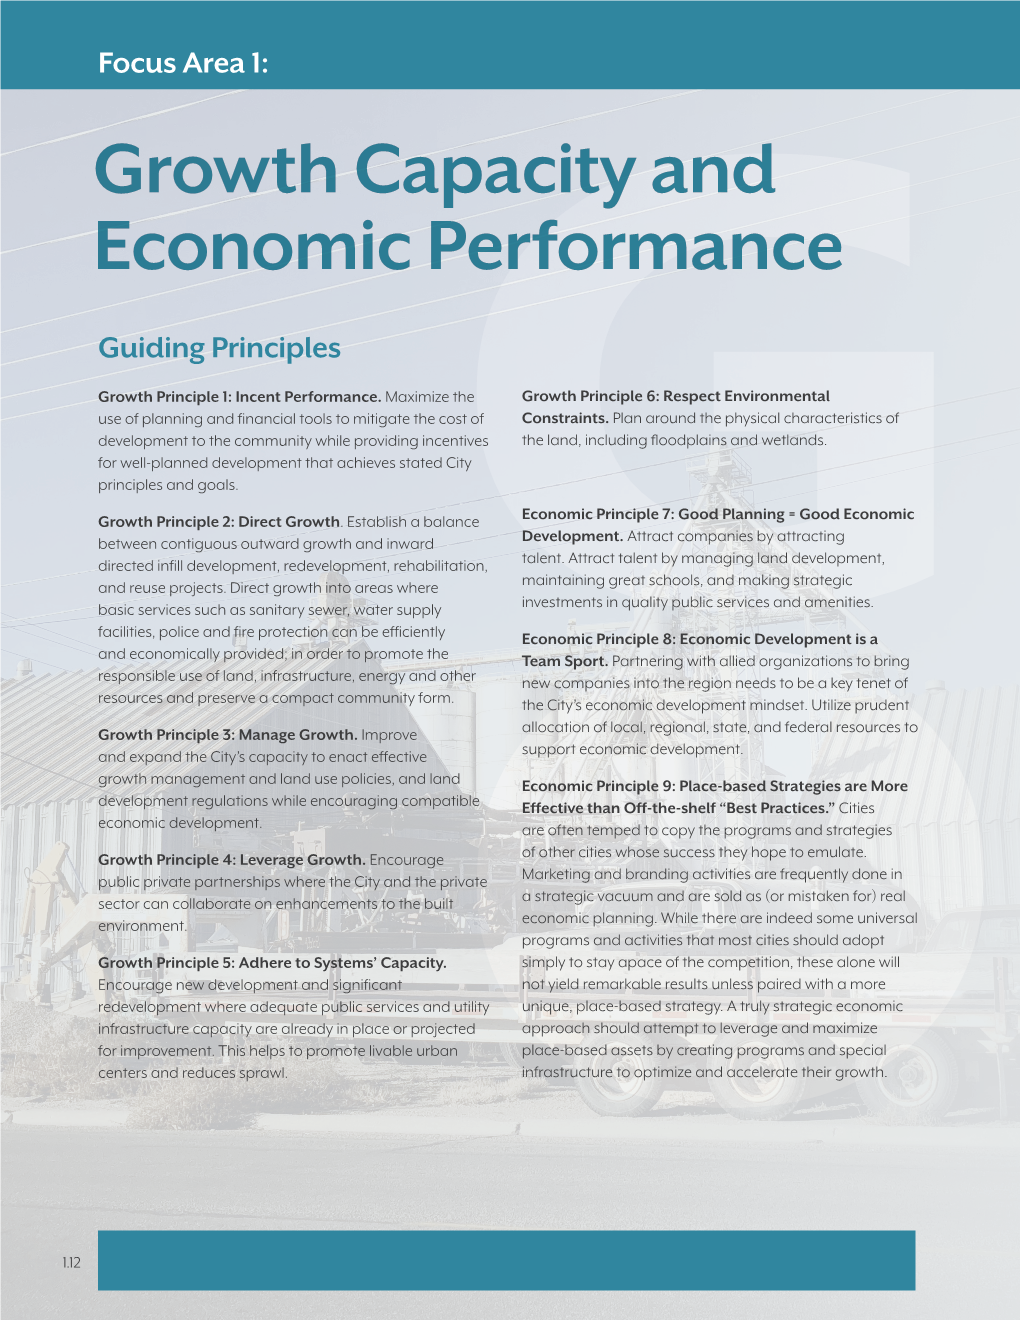 Growth Capacity and Economic Performance